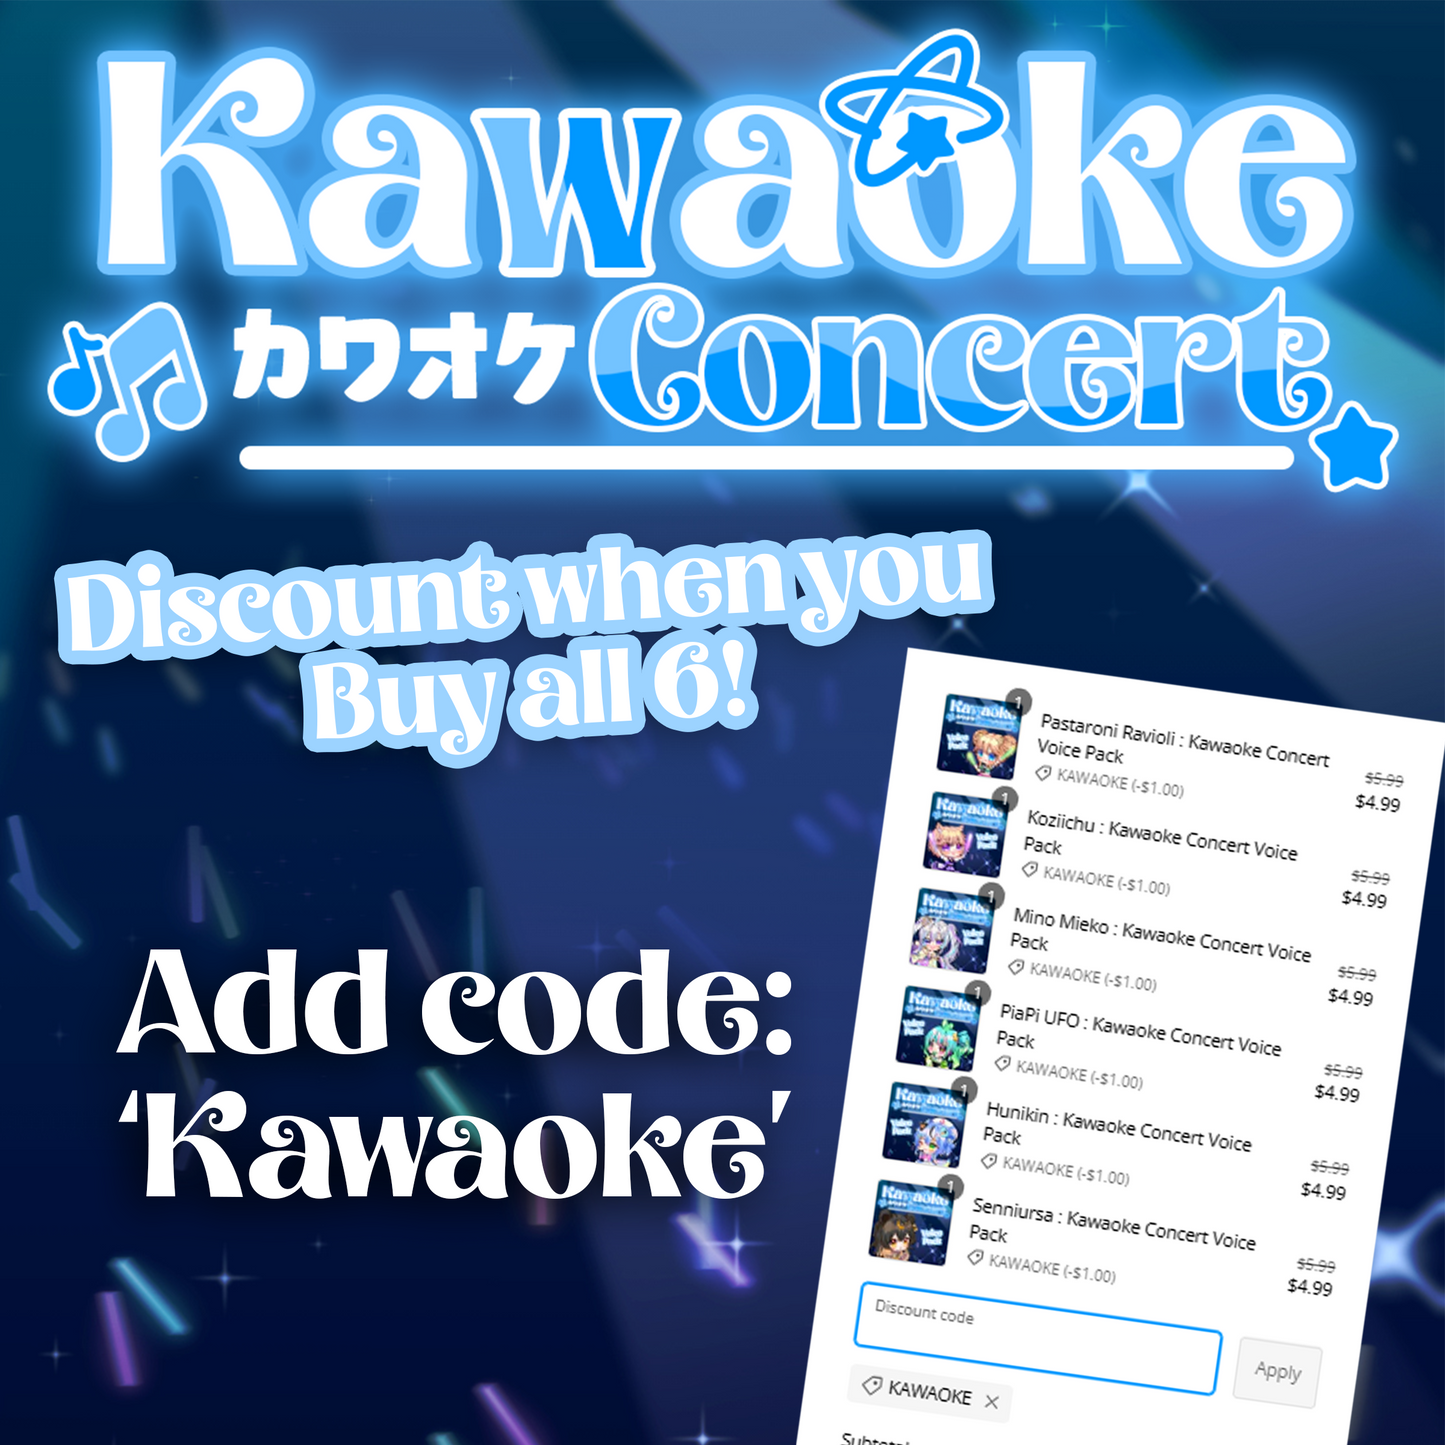 Pastaroni Ravioli : Kawaoke Concert Voice Pack